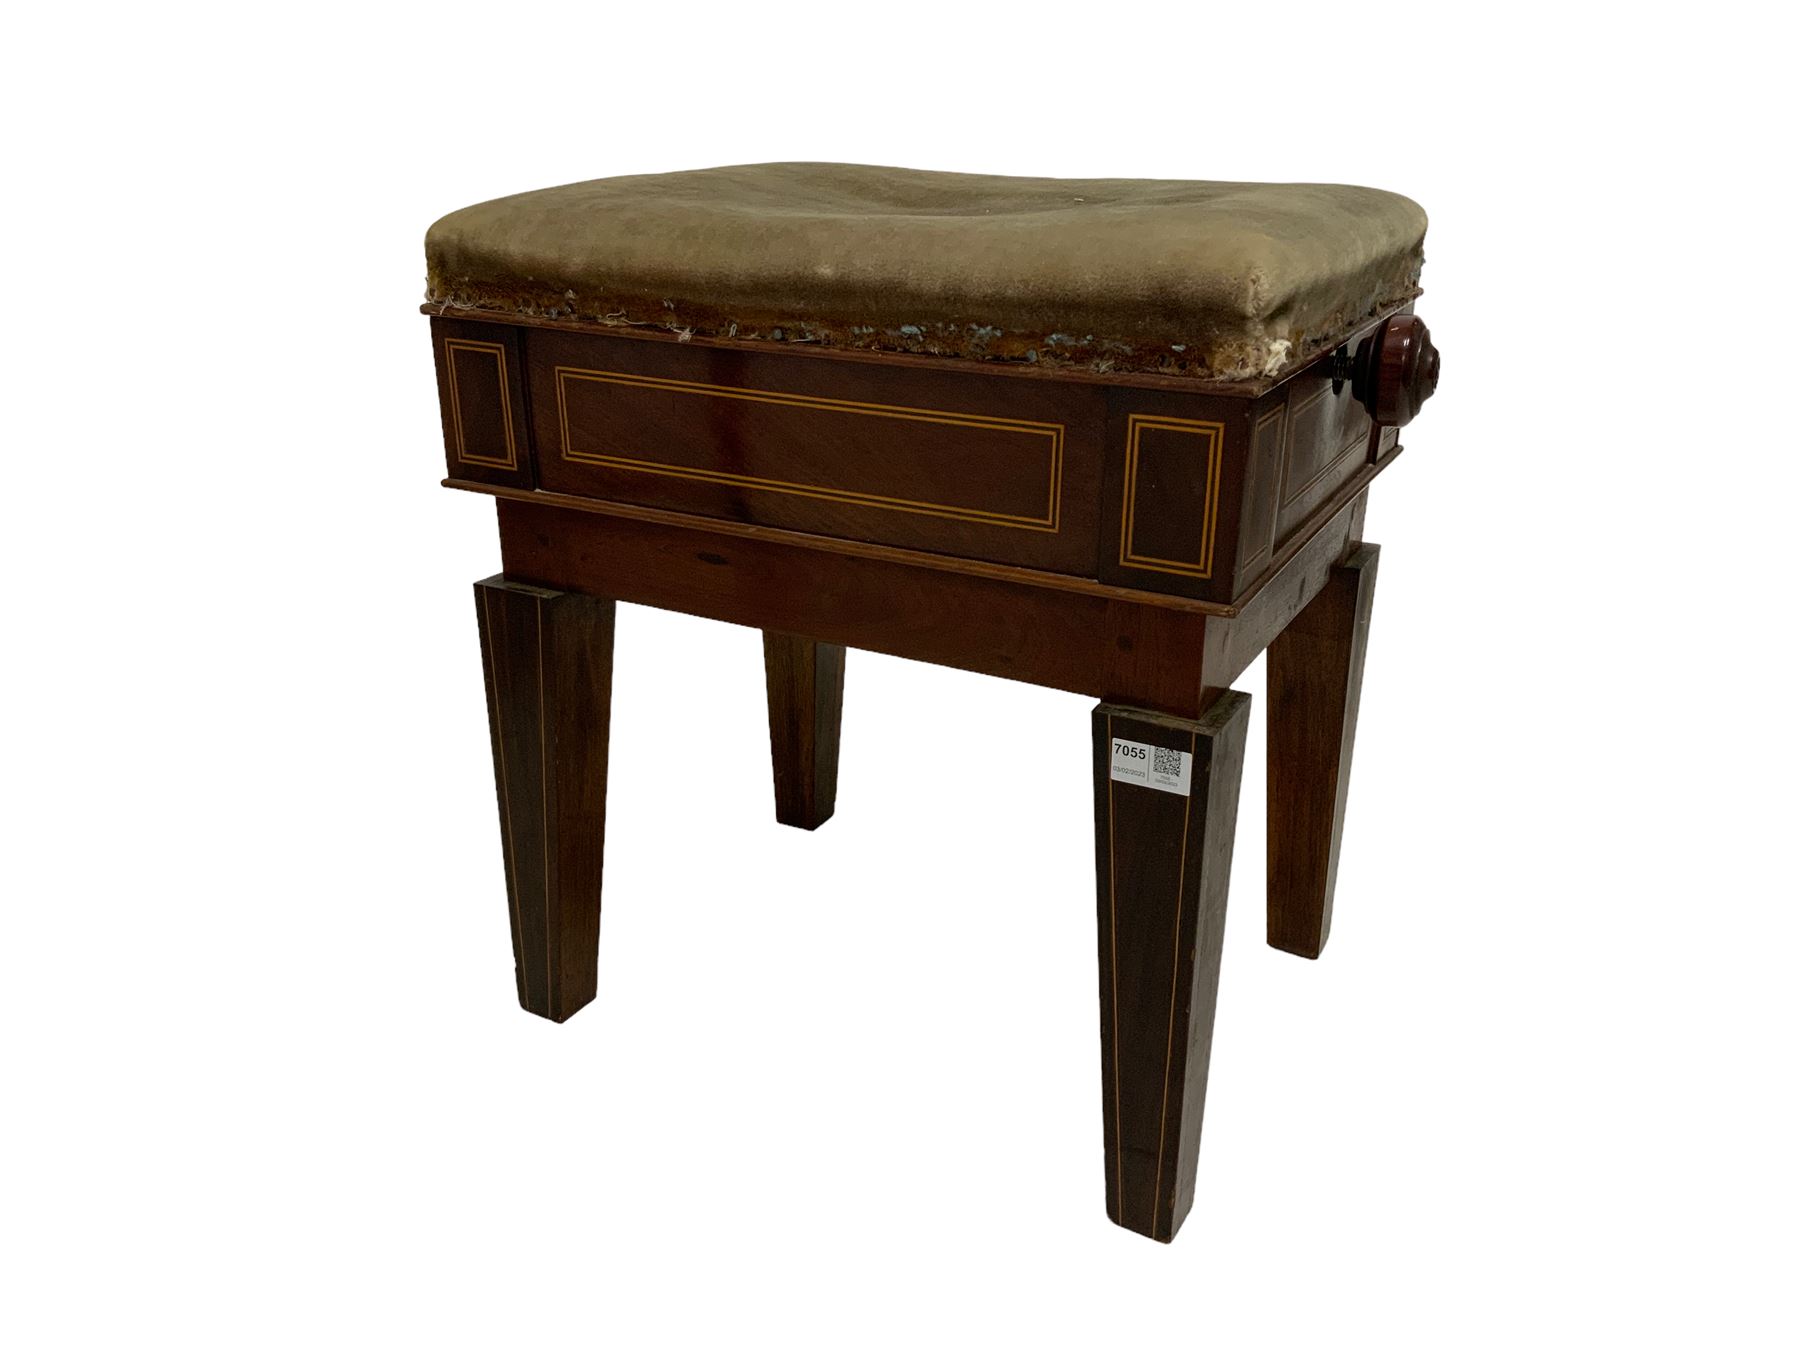 Edwardian inlaid mahogany rise and fall piano stool - Image 3 of 4